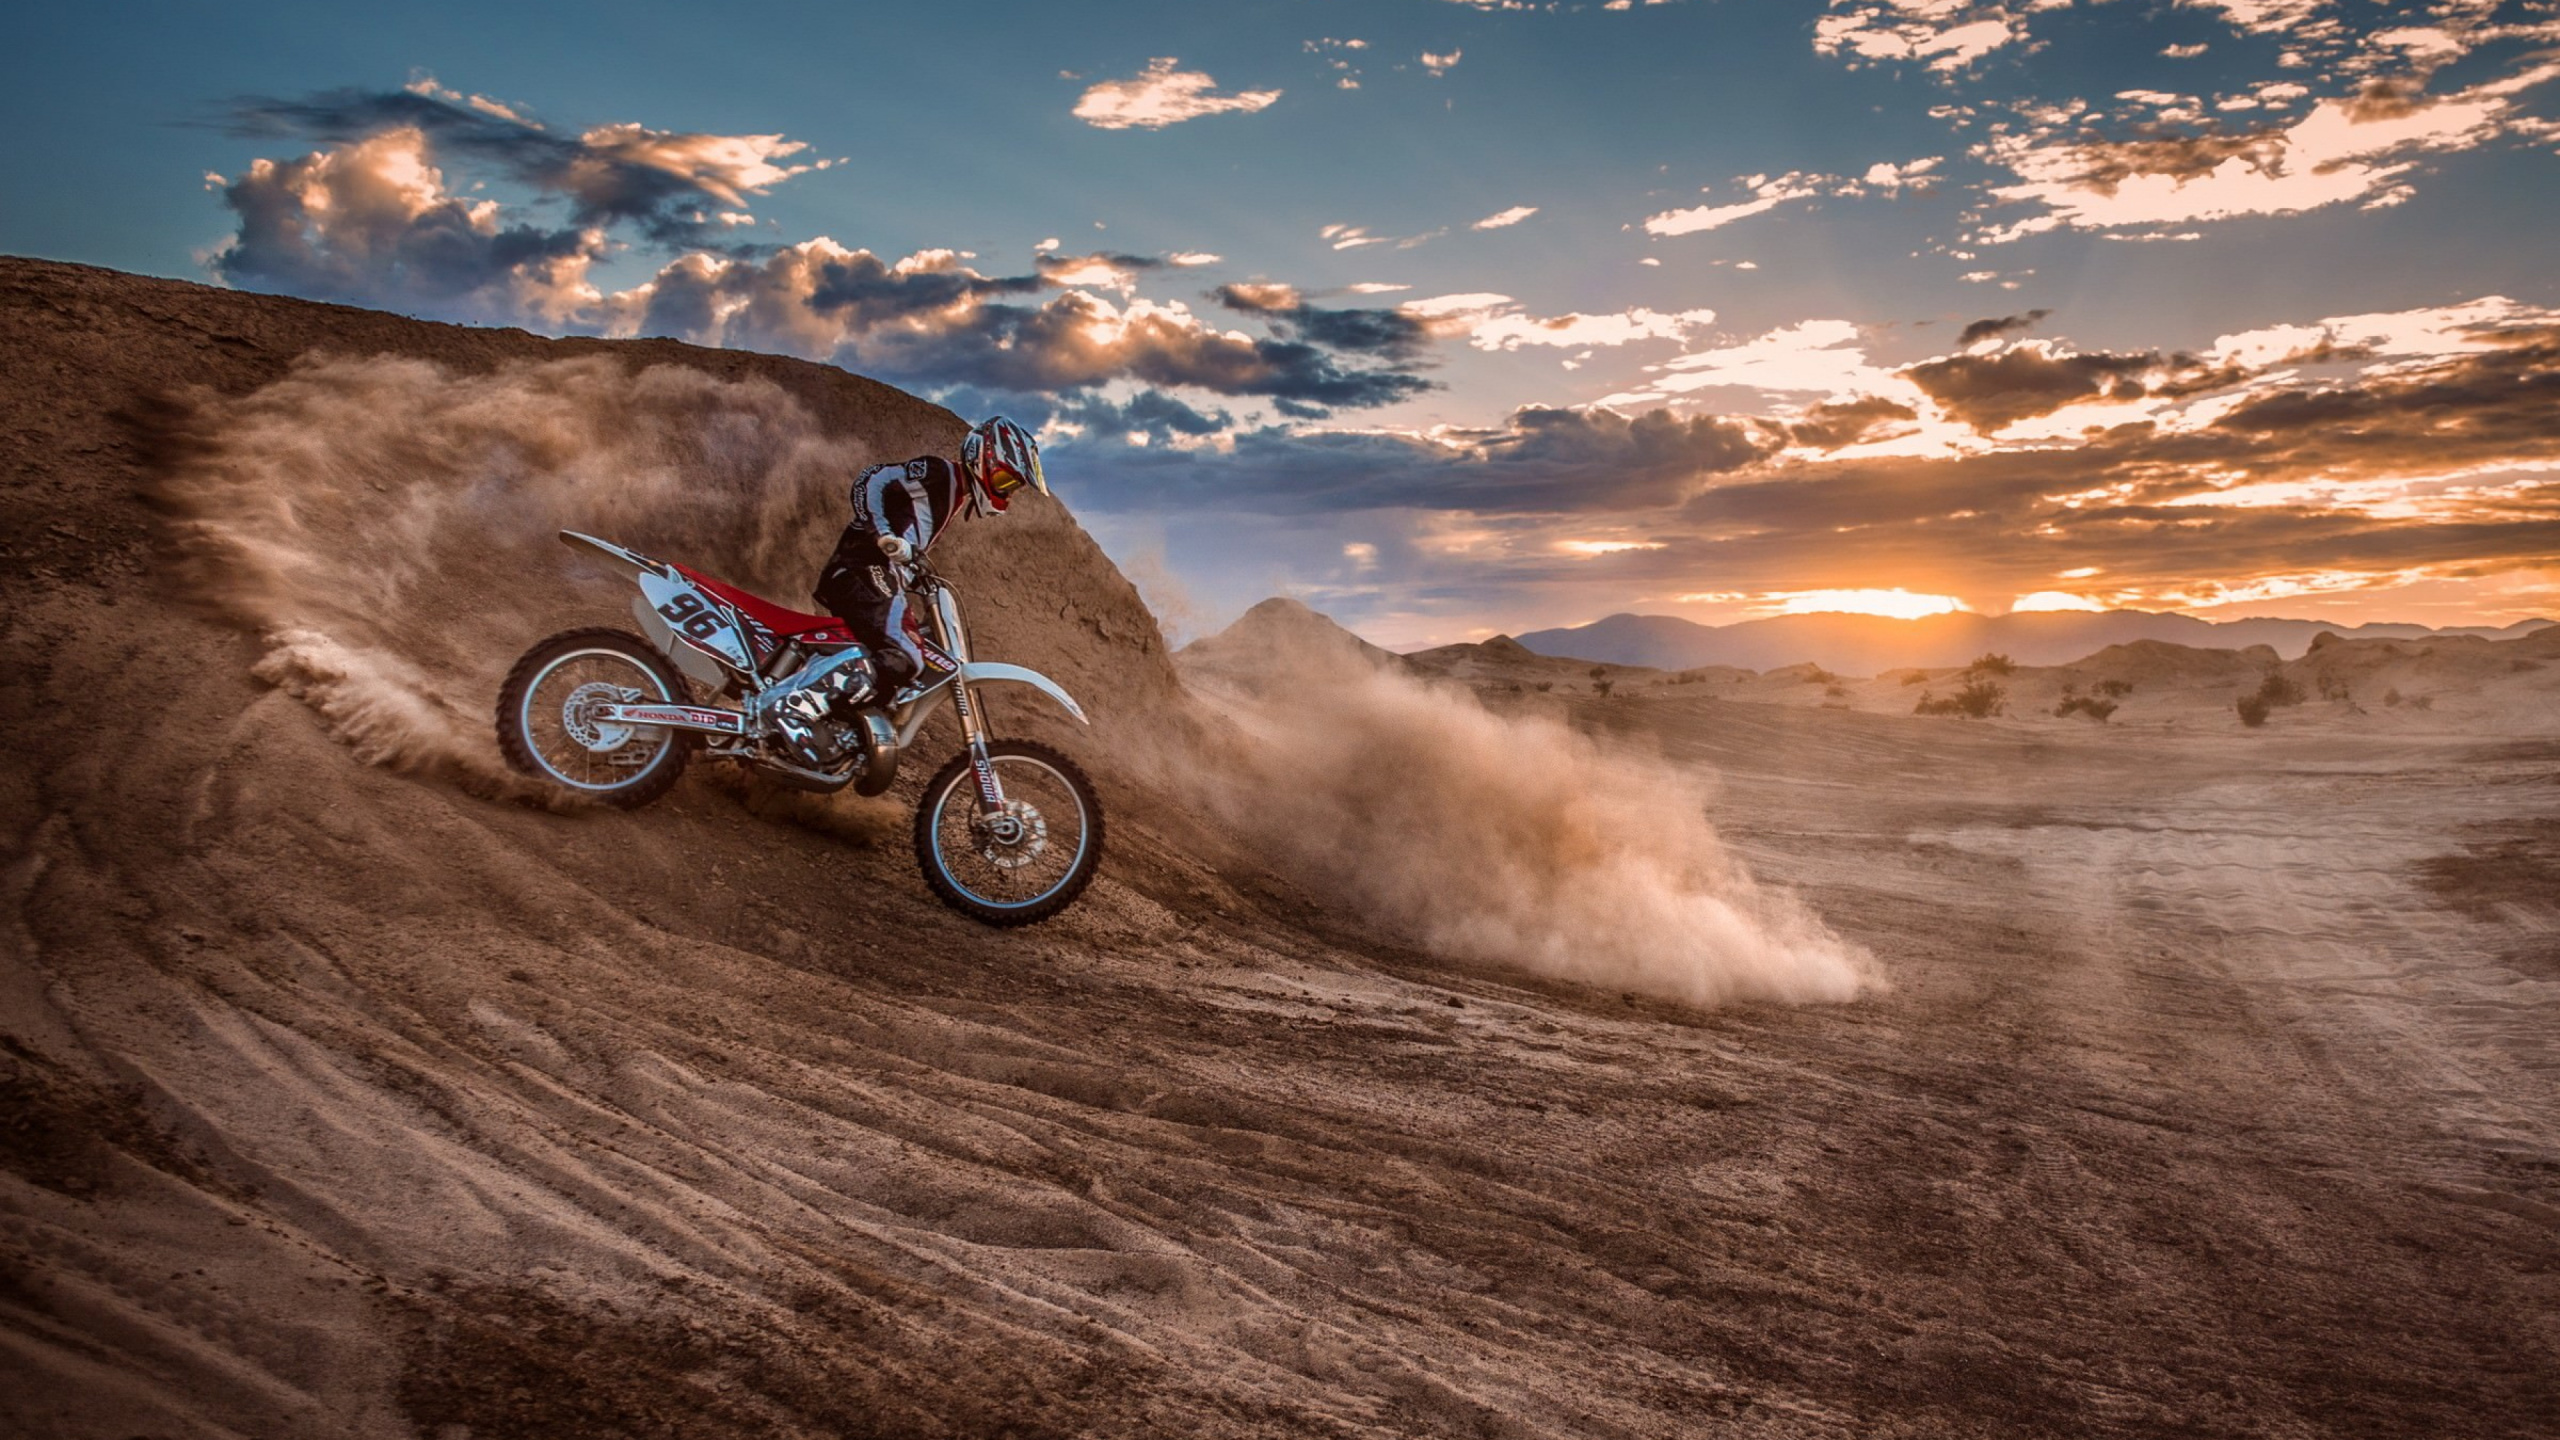 Man Riding Motocross Dirt Bike on Brown Sand During Daytime. Wallpaper in 2560x1440 Resolution